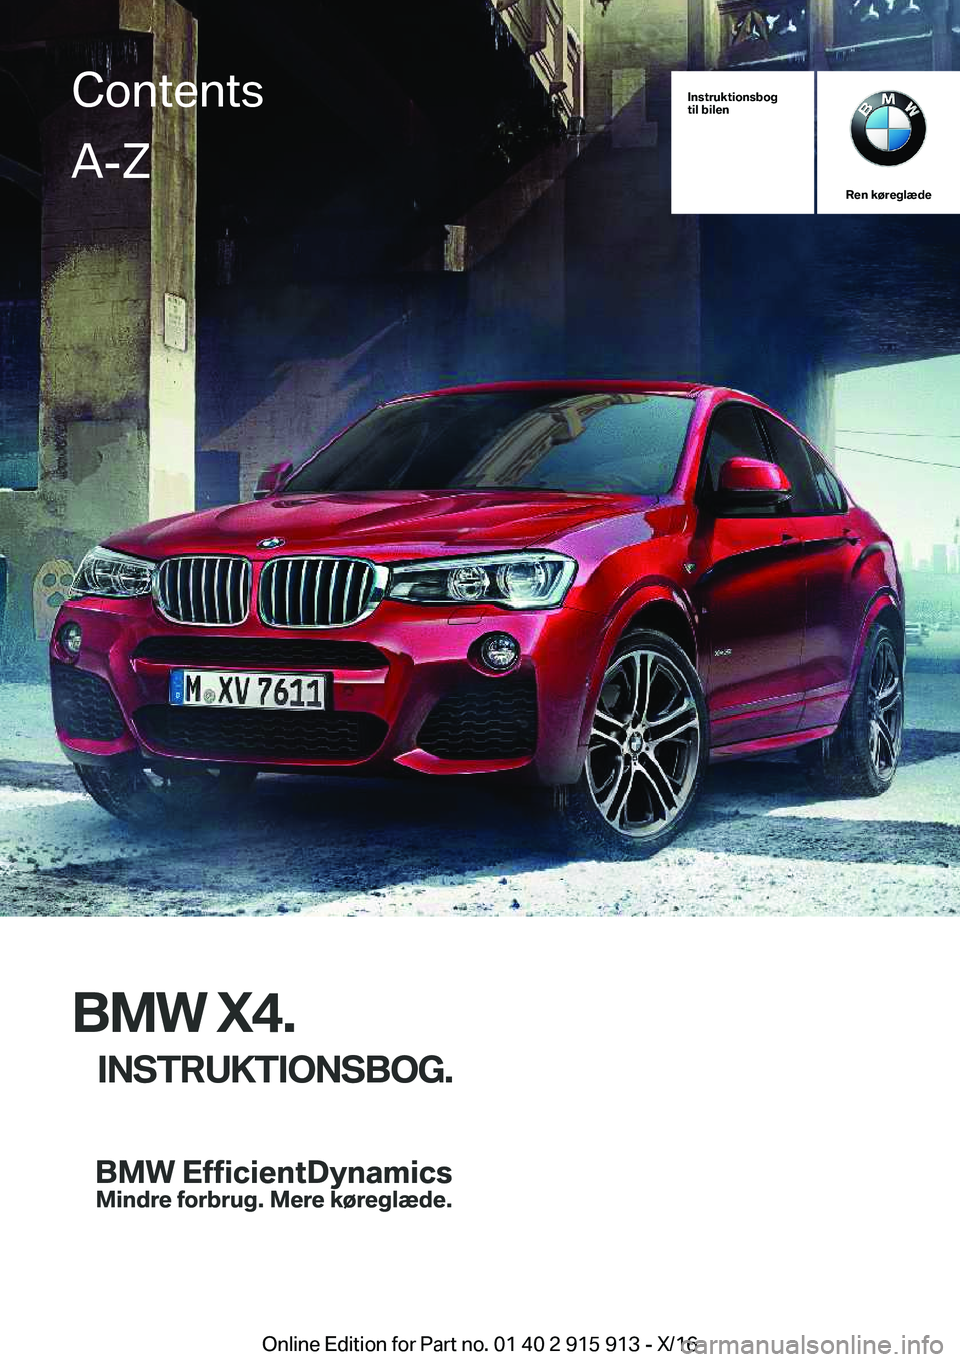 BMW X4 2017  InstruktionsbØger (in Danish) �I�n�s�t�r�u�k�t�i�o�n�s�b�o�g
�t�i�l��b�i�l�e�n
�R�e�n��k�